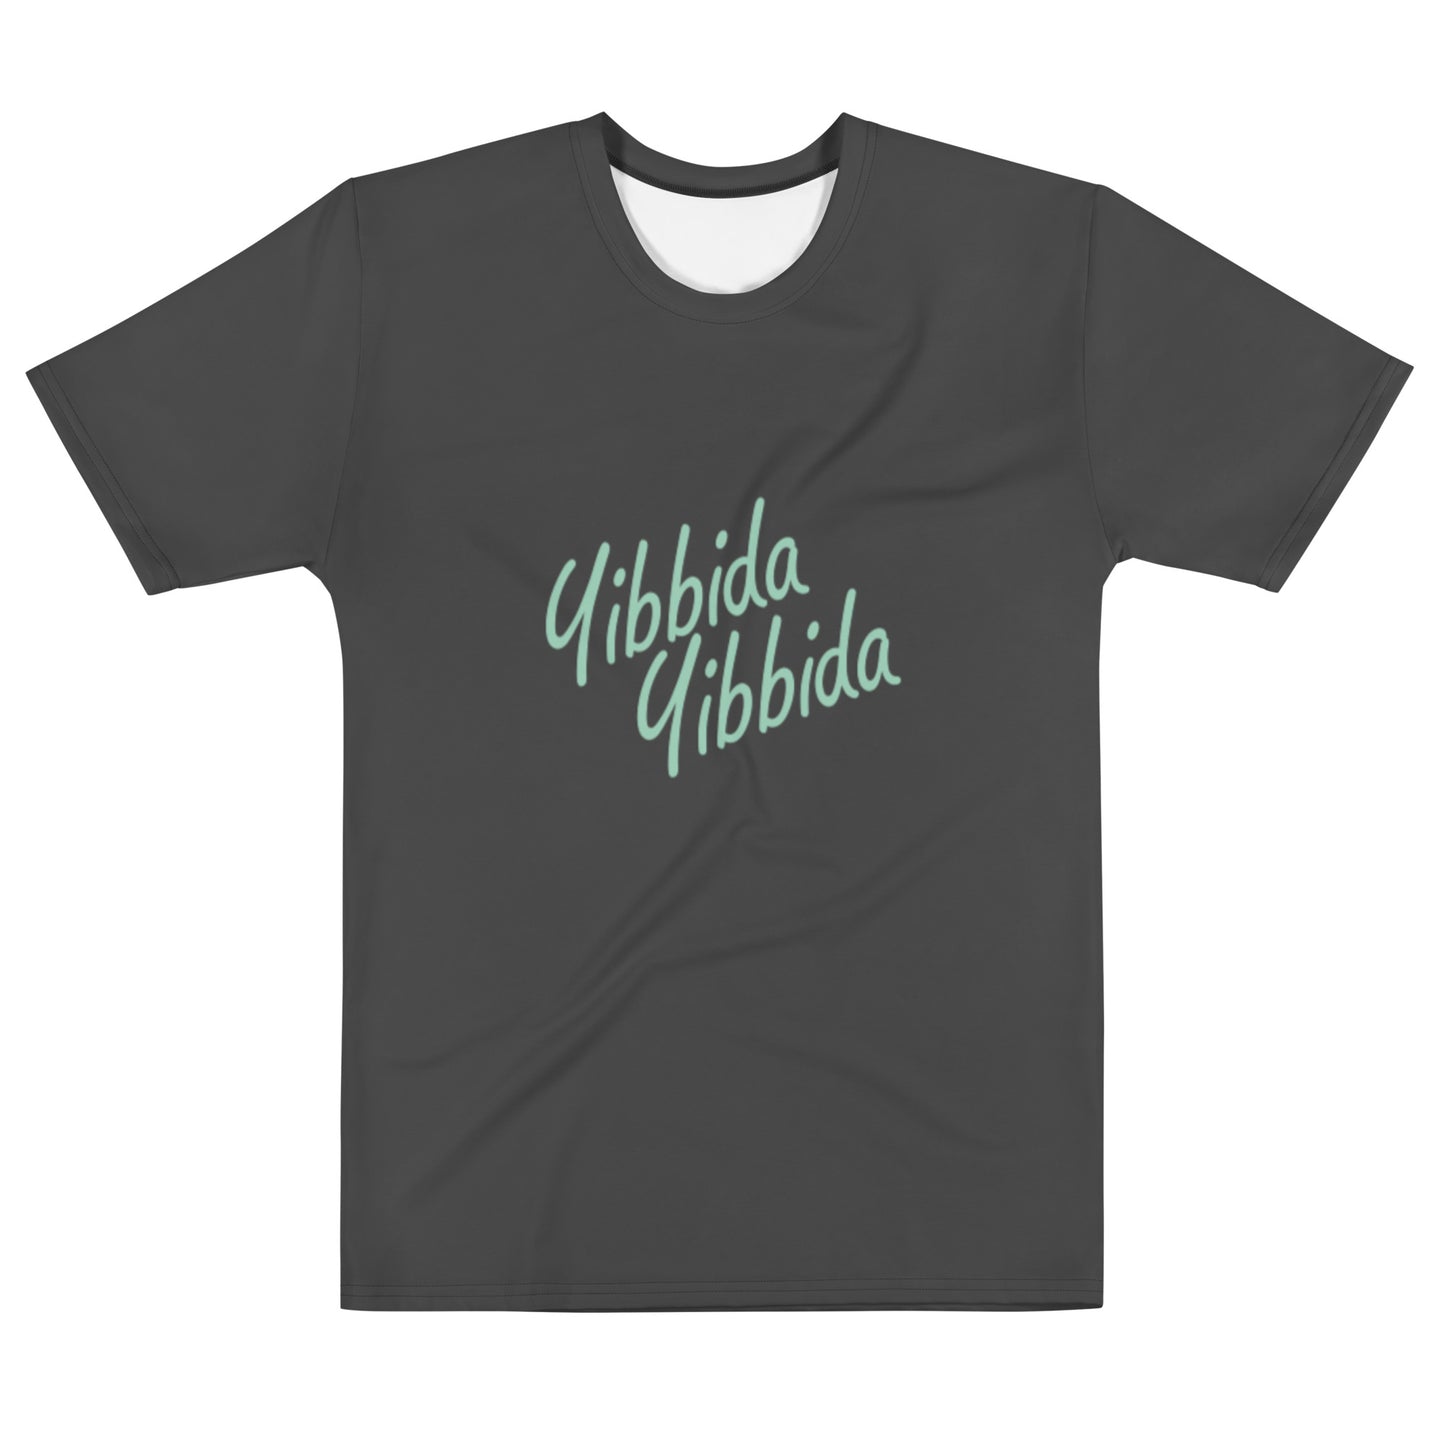 Yibbida Yibbida - Sustainably Made Men's Short Sleeve Tee